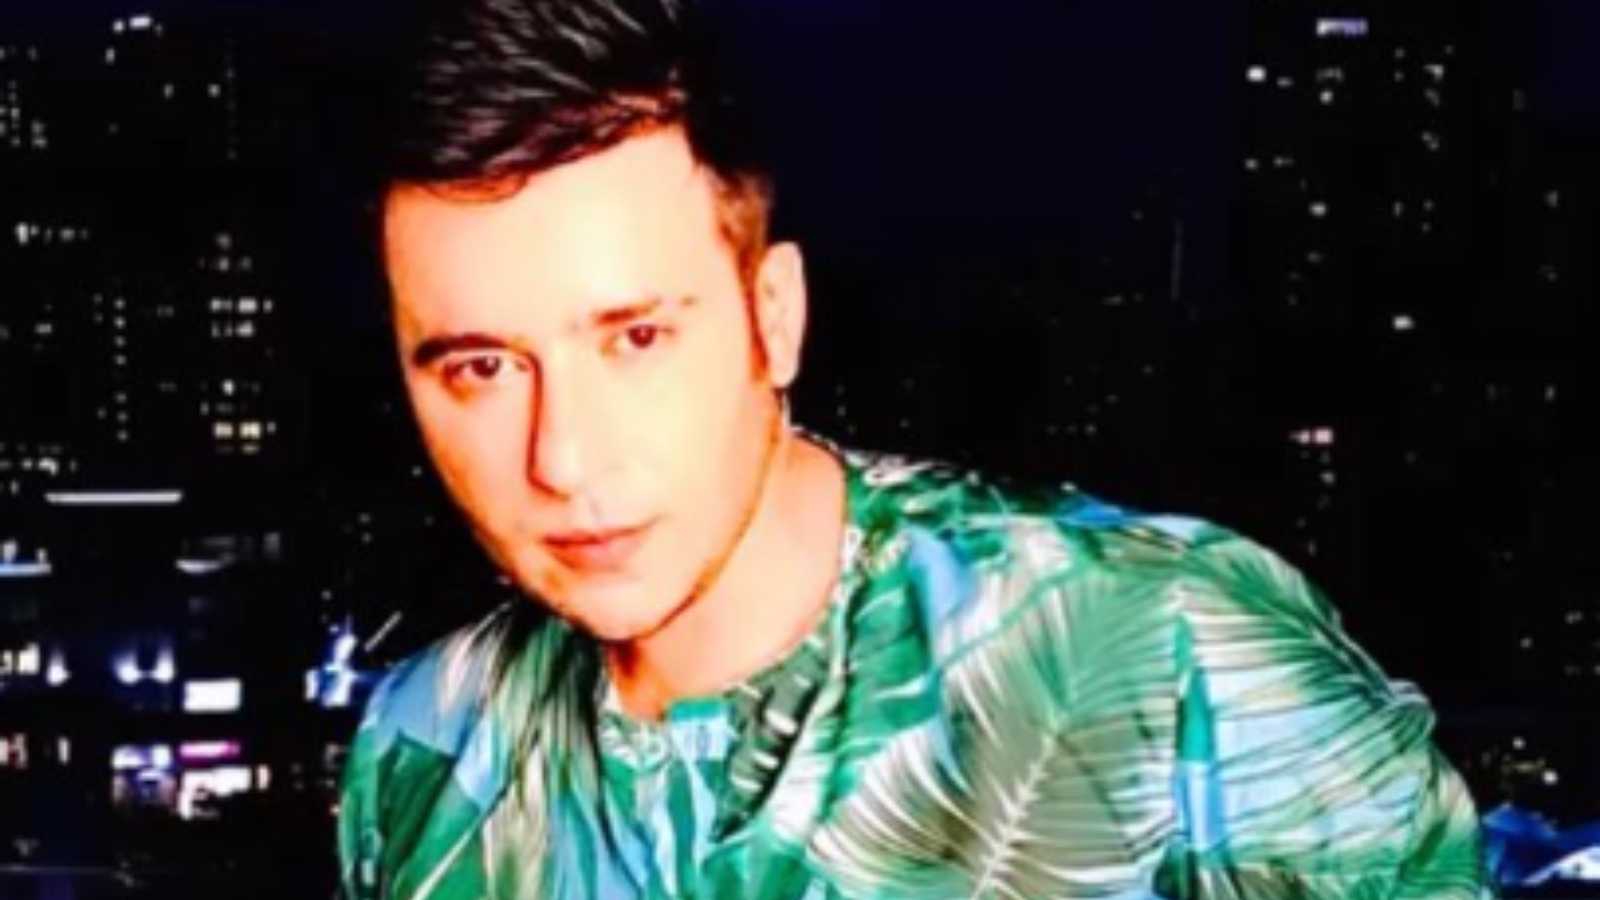 Splitsvilla 9 fame Aditya Singh Rajput found dead in his Mumbai home, here's what we know